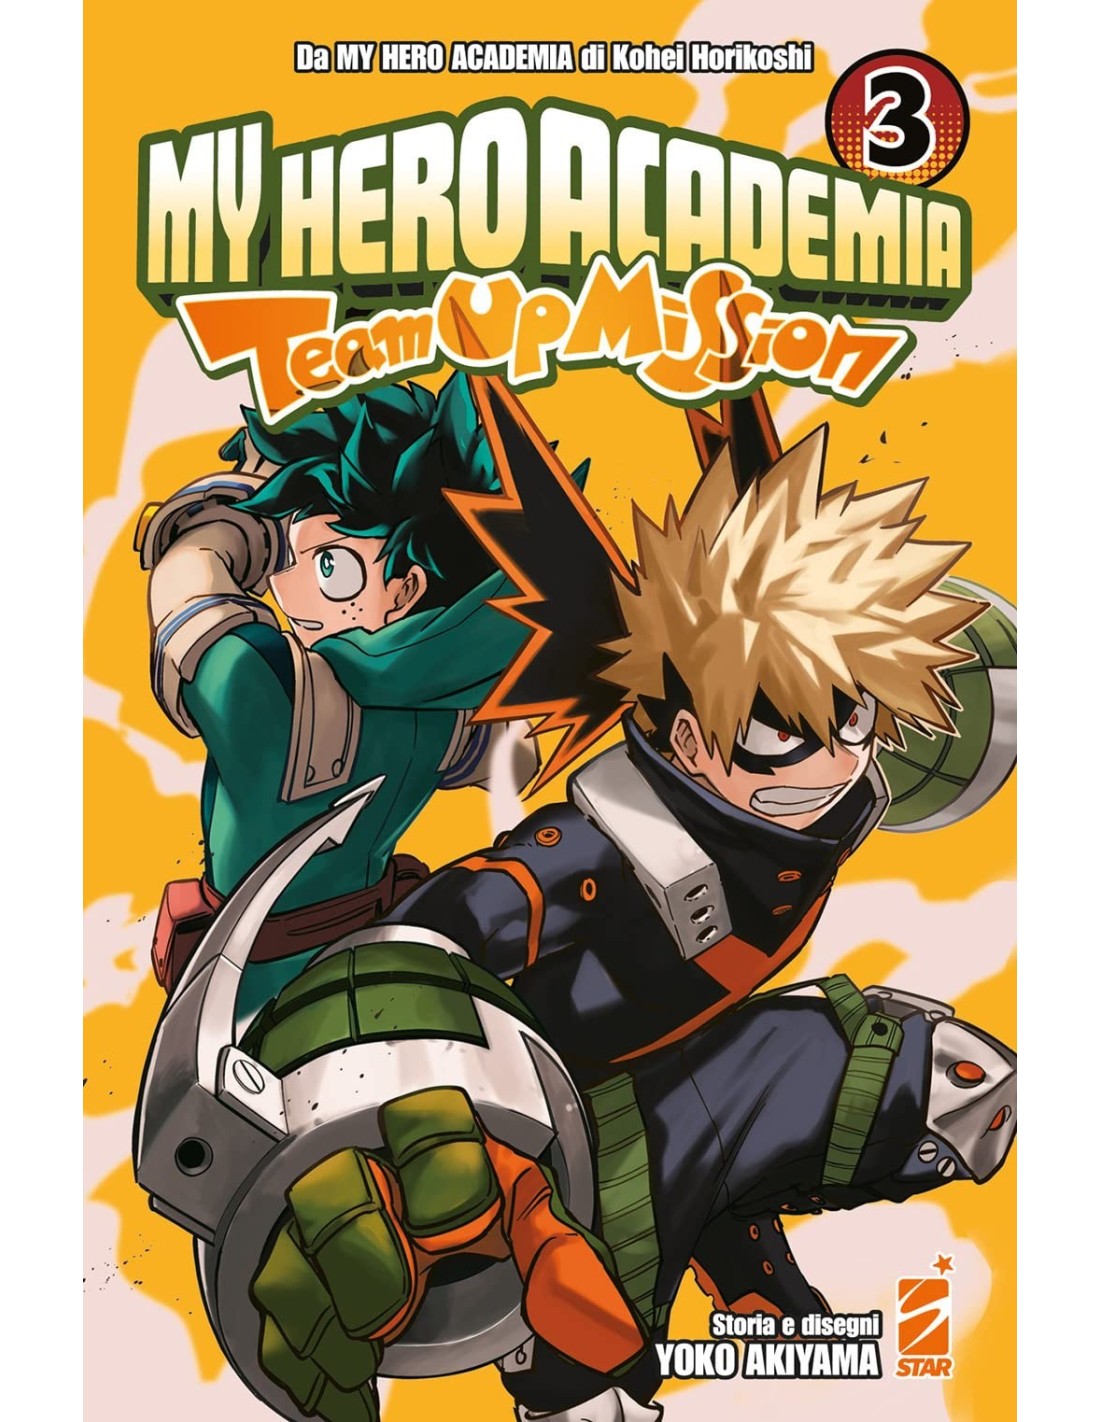 manga MY HERO ACADEMIA TEAM UP MISSION Nr. 3 Edizioni Star Comics